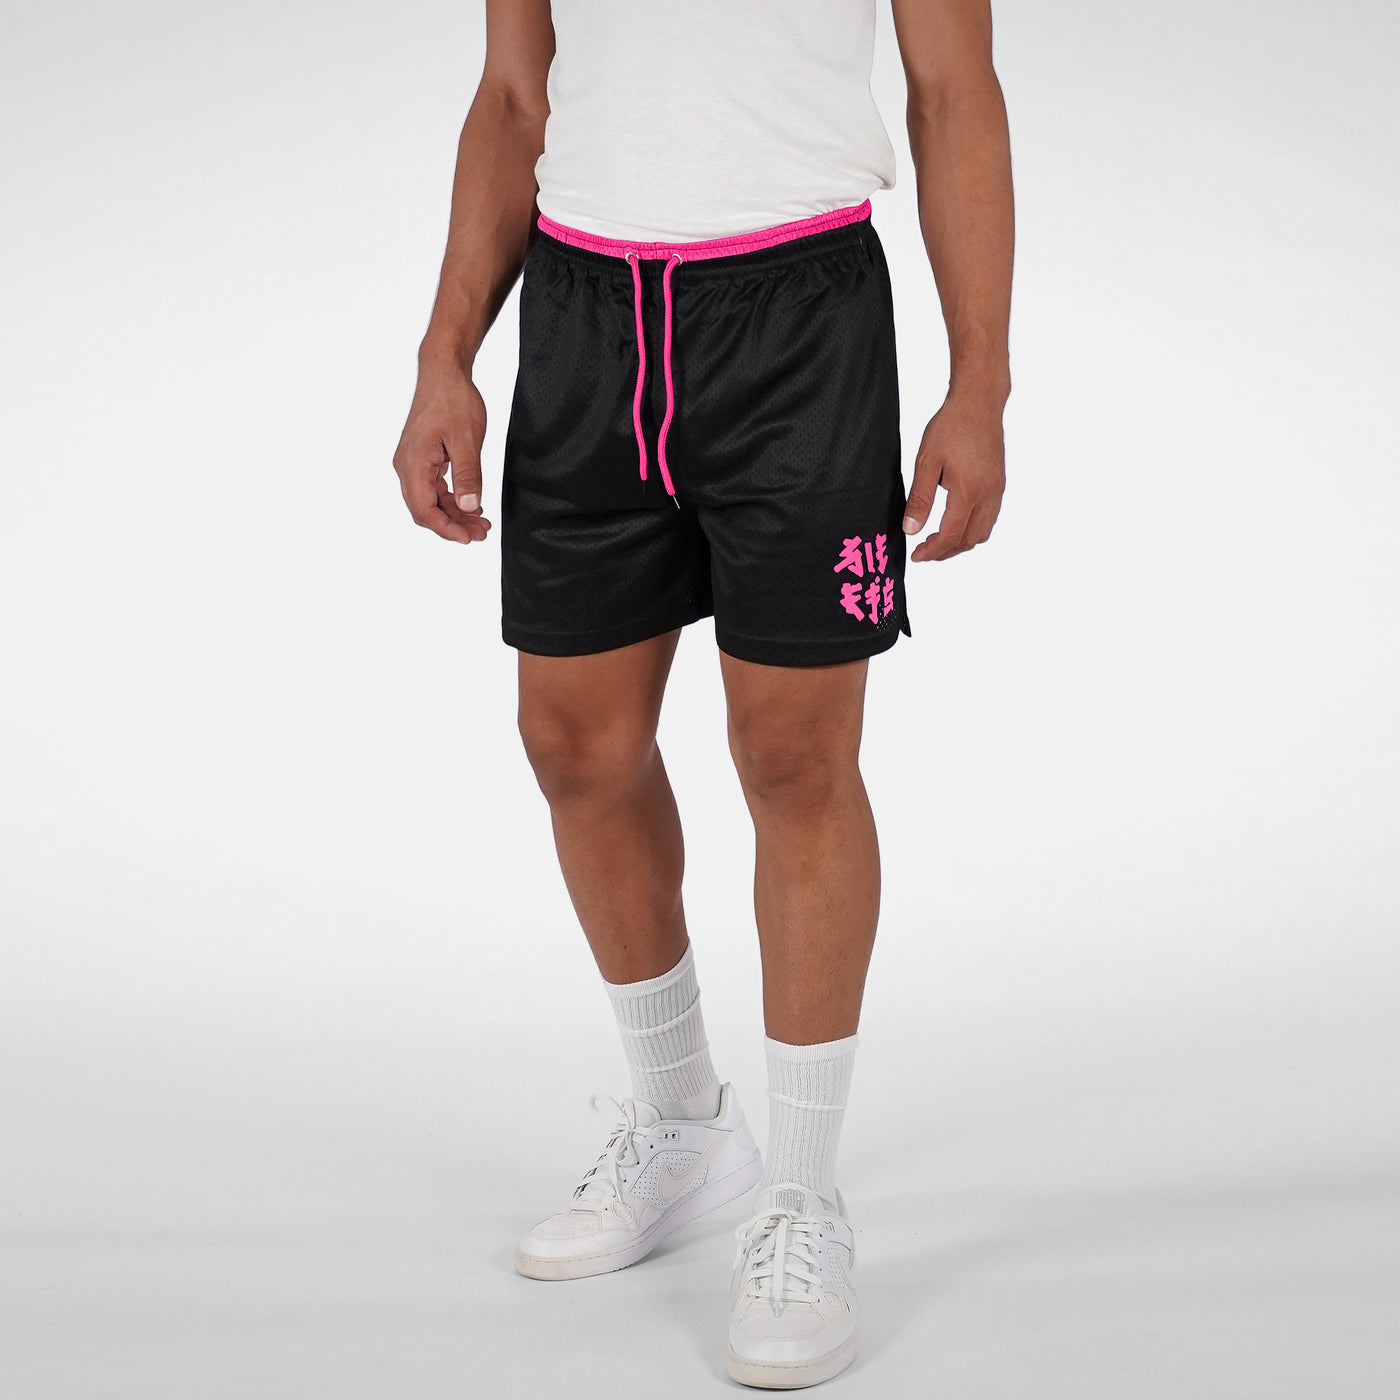 Pitch Black Finest Pink Shorts - 7"